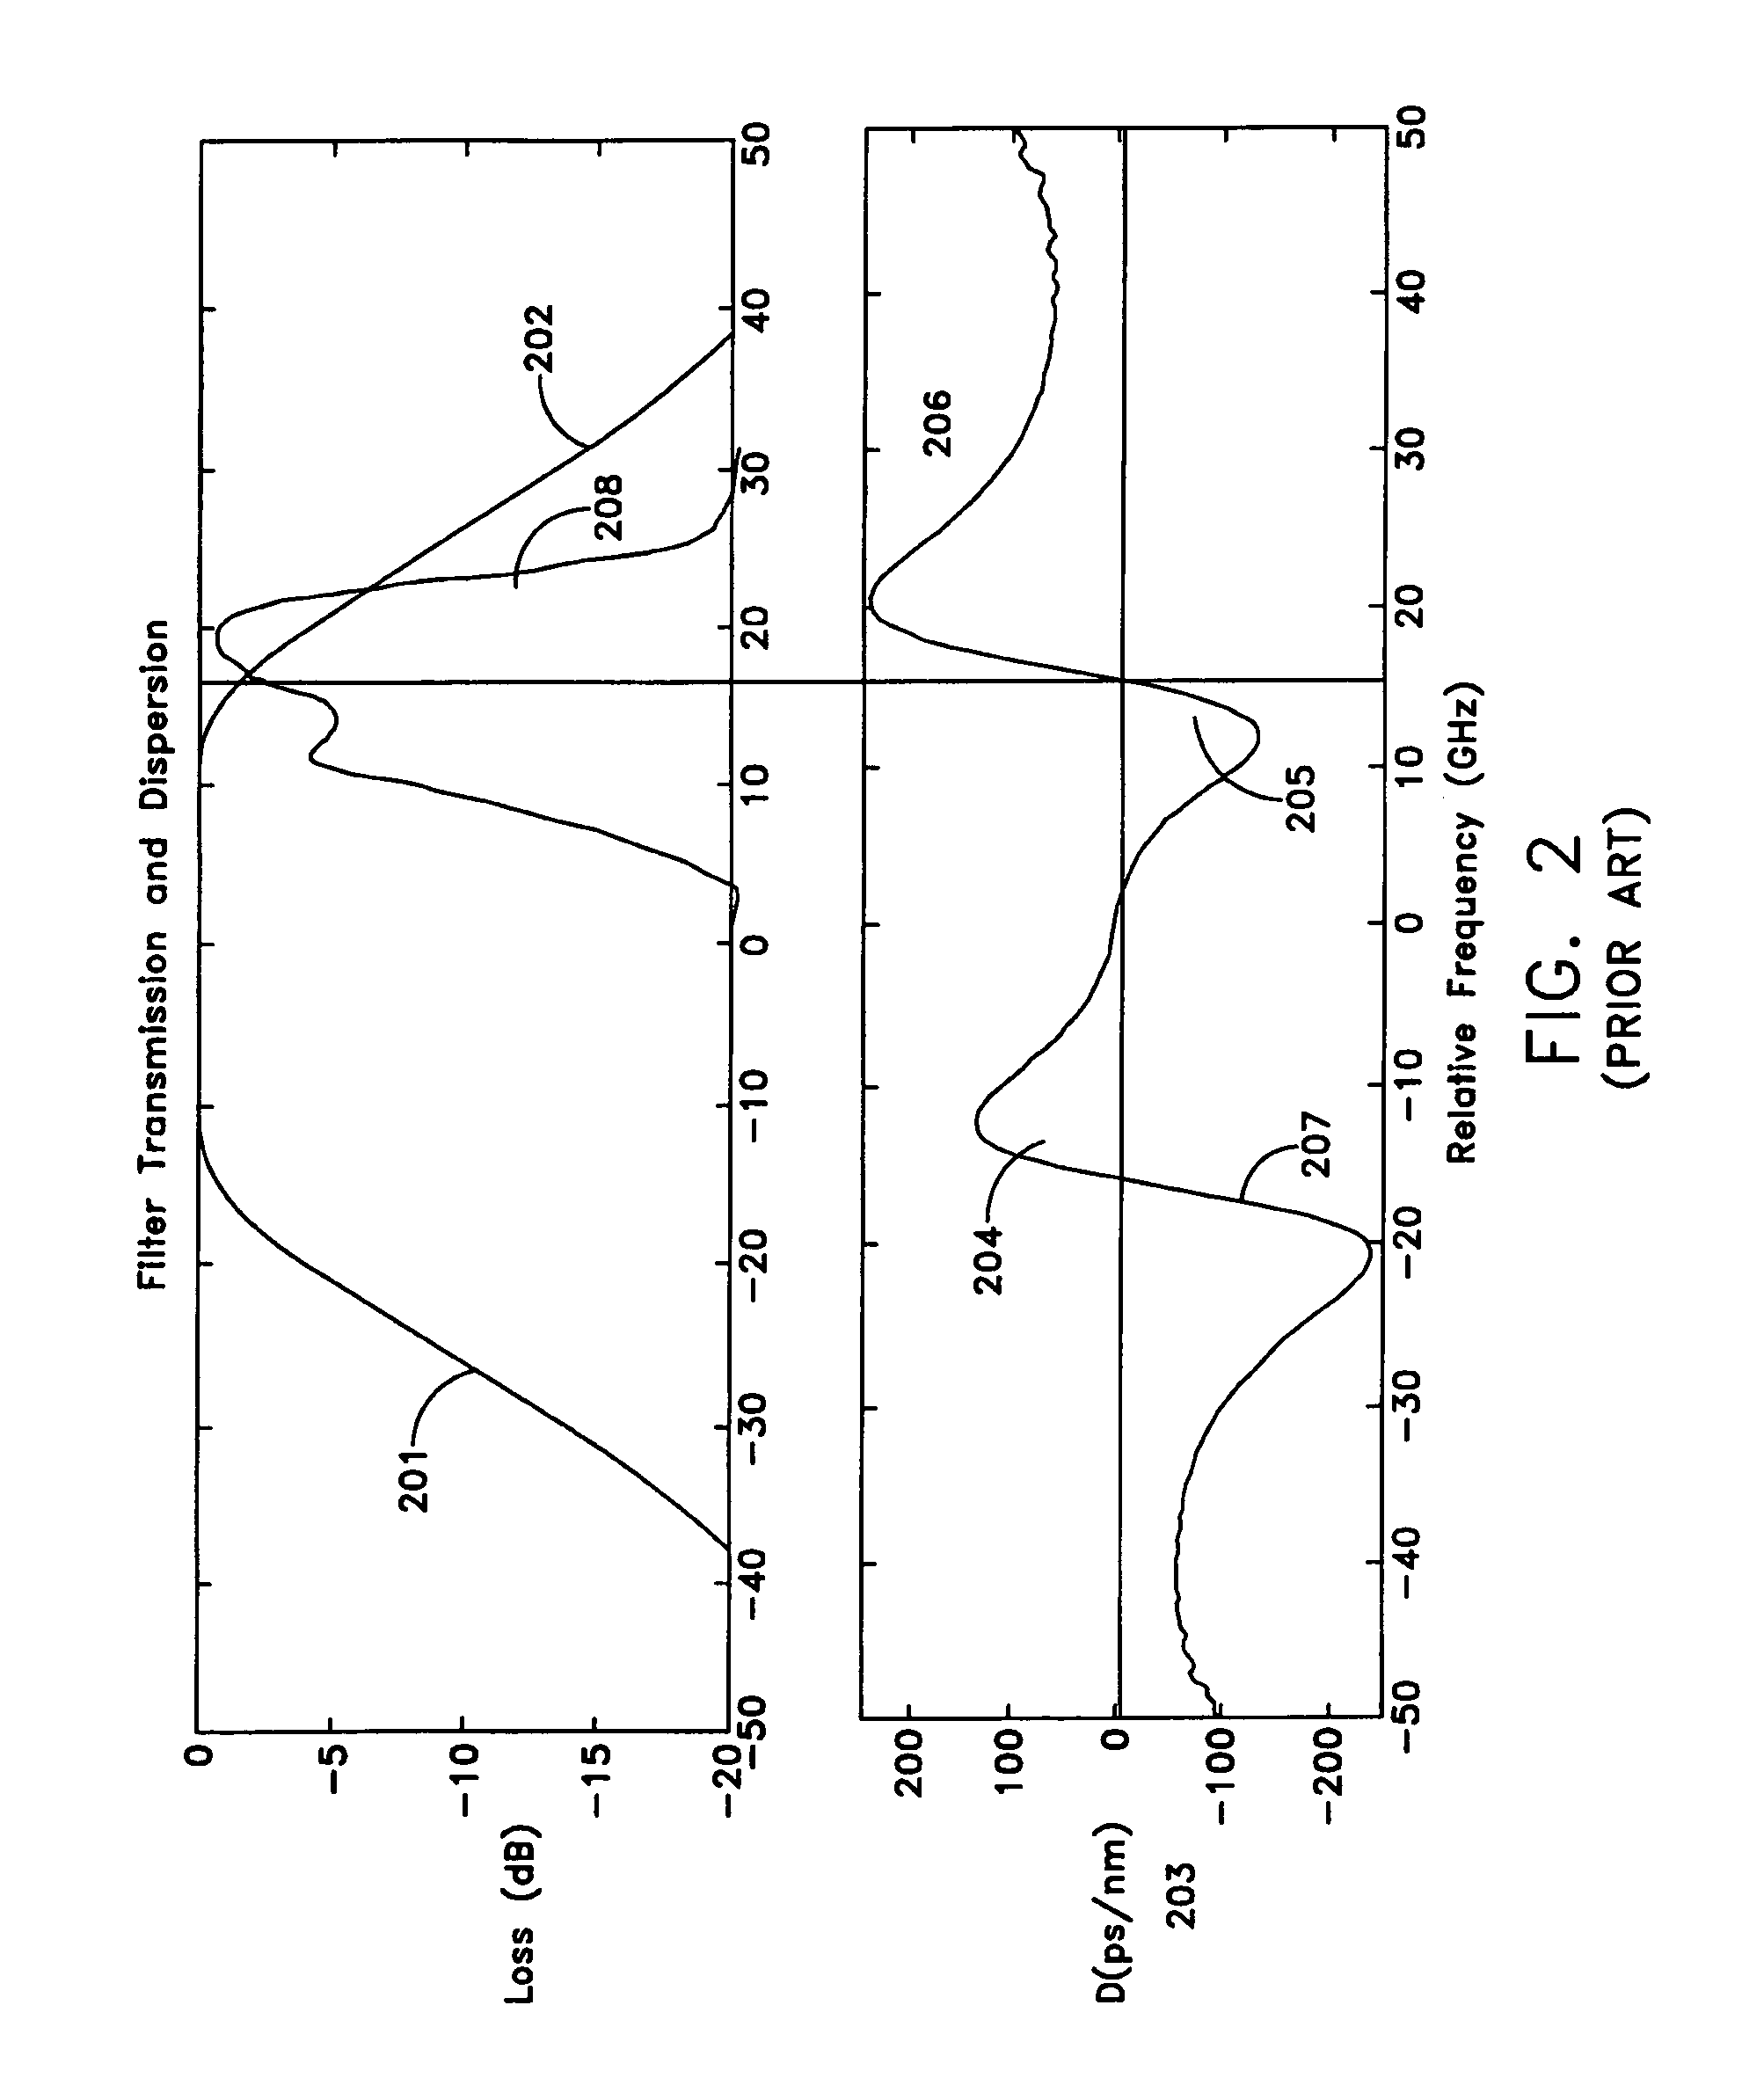 Flat dispersion frequency discriminator (FDFD)